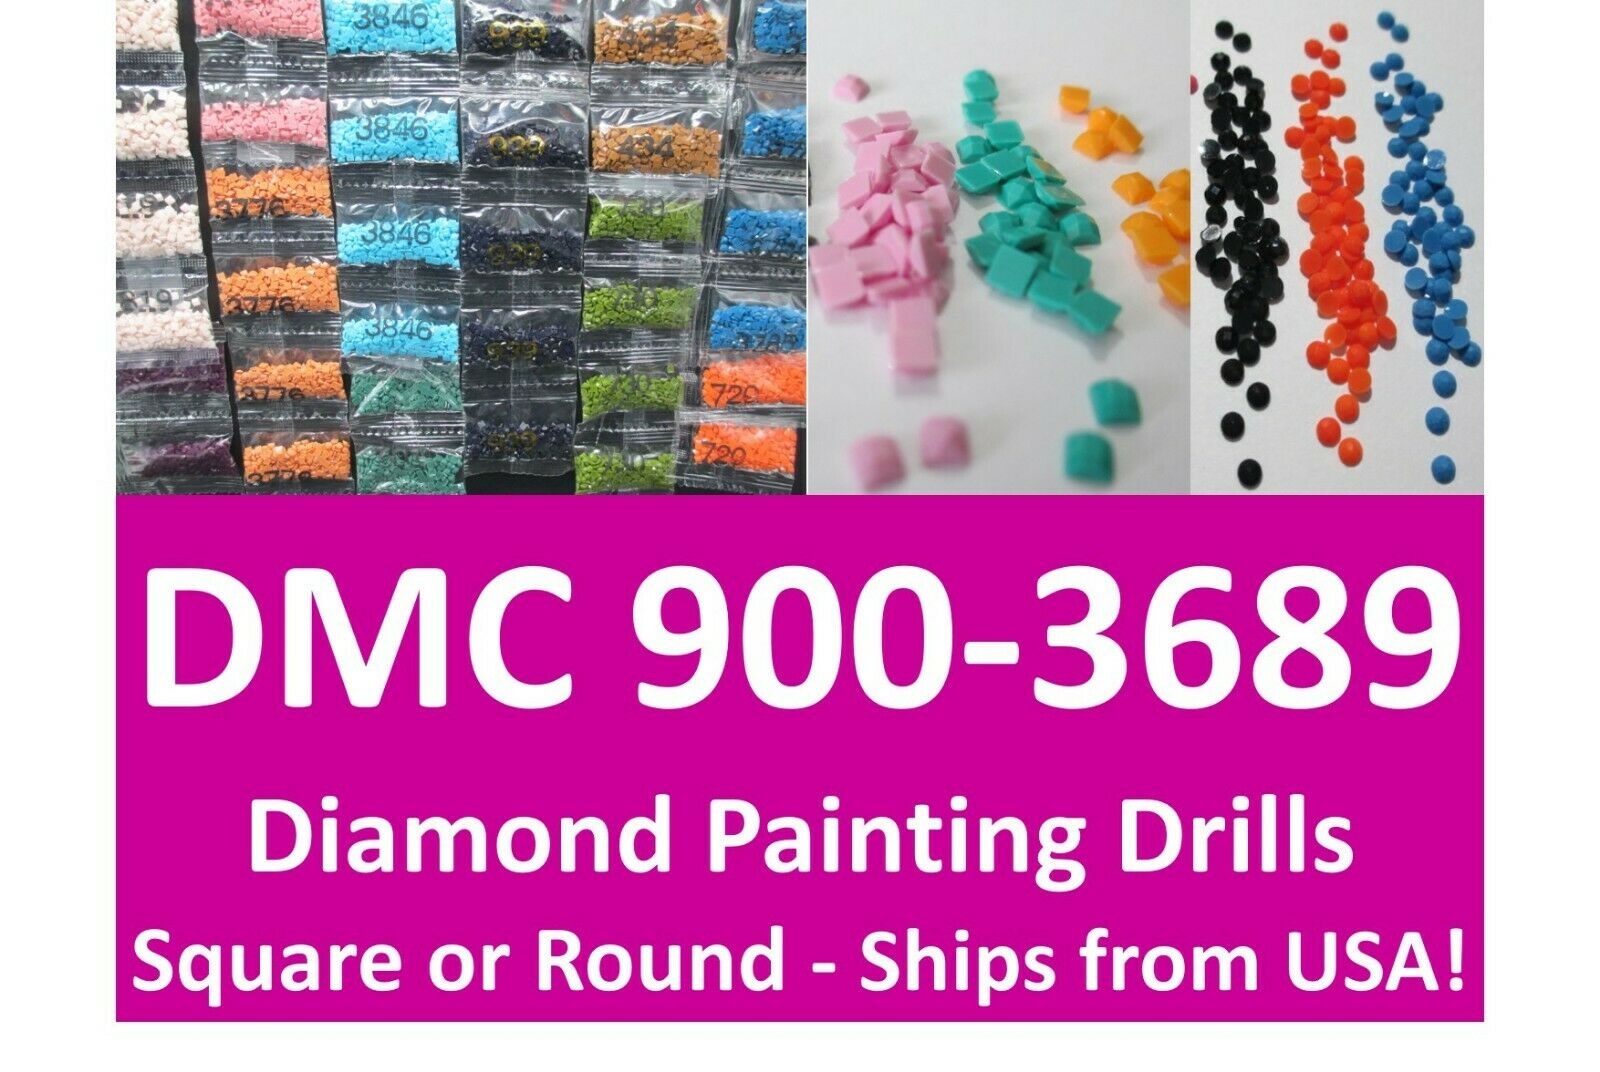 Diamond Painting Drills Dmc 900-3689 - Square Or Round - Individual Bags